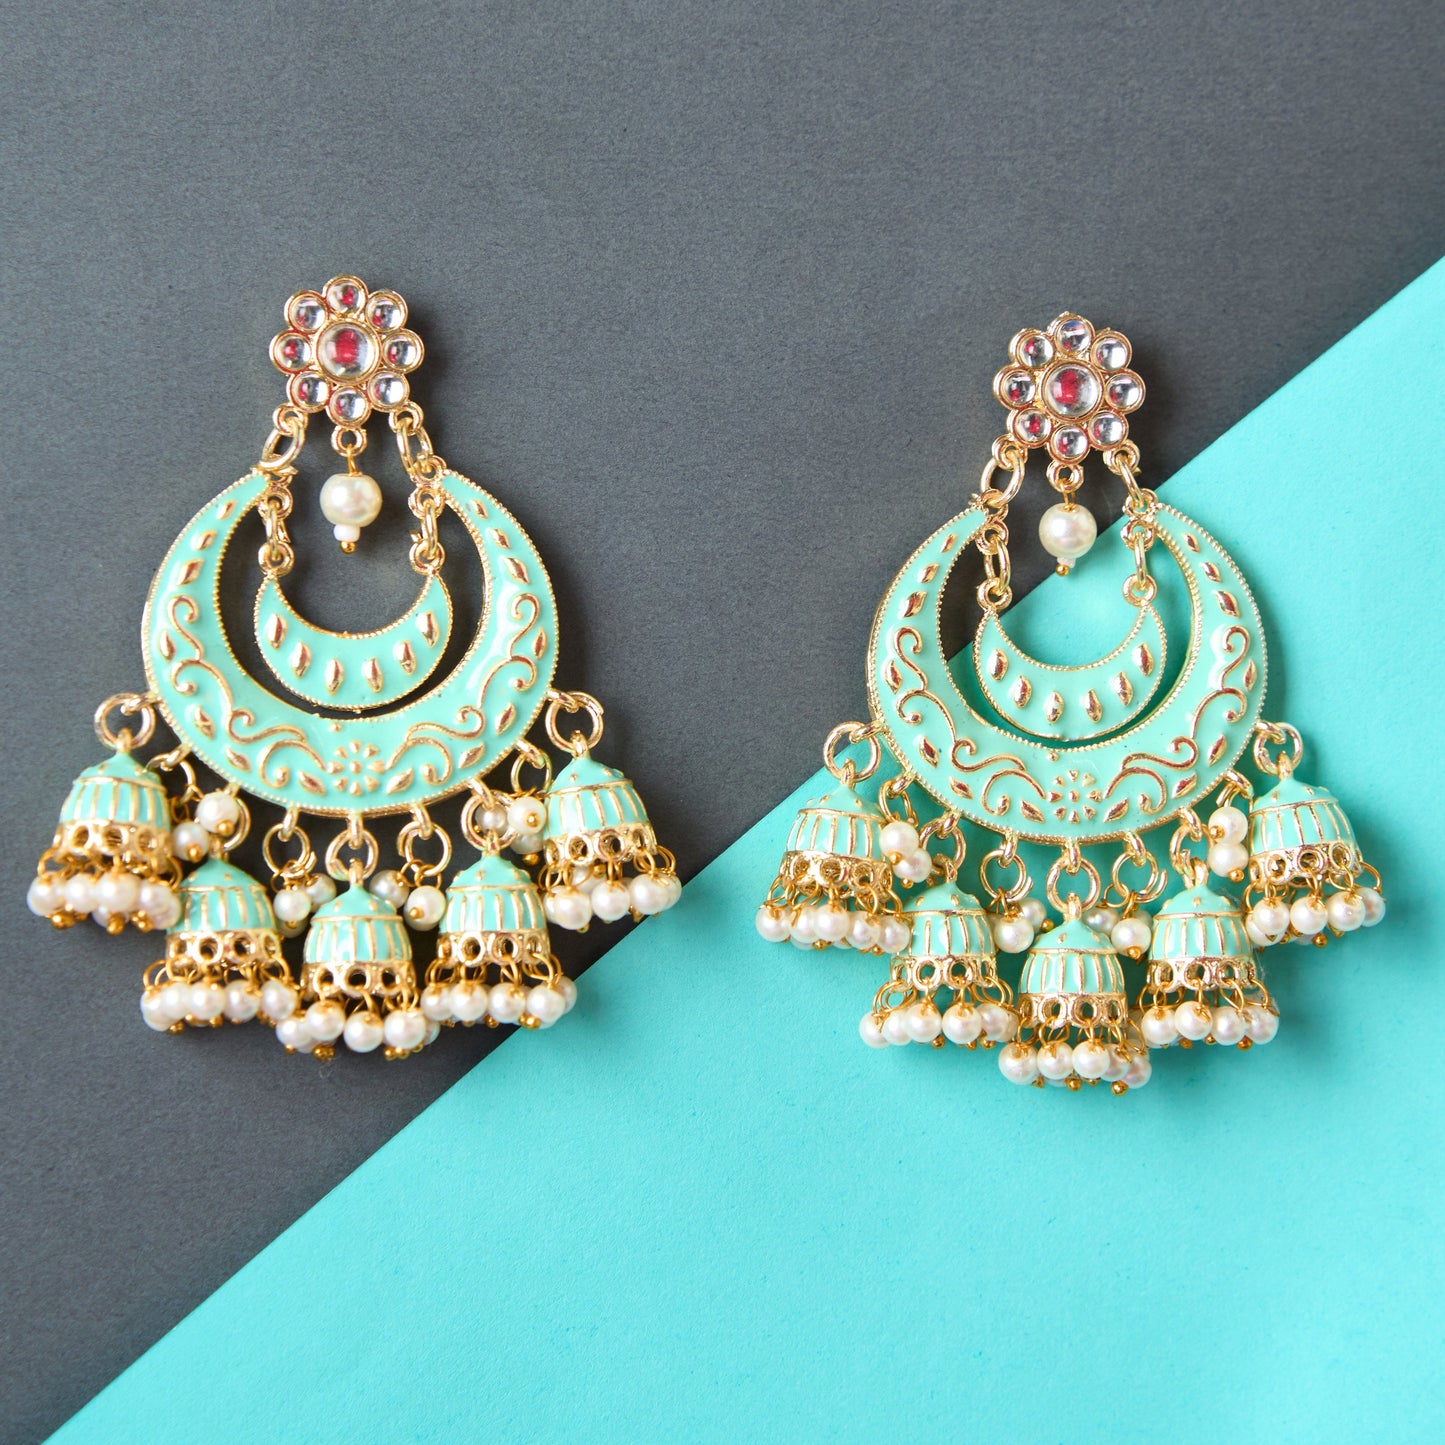 Moonstruck Golden/Gold Chandbali/Bali Dangle Earrings with Kundan,Meenakari & Pearls - Elevate Your Ethnic Indian Glamour look for Women & Girls - www.MoonstruckINC.com